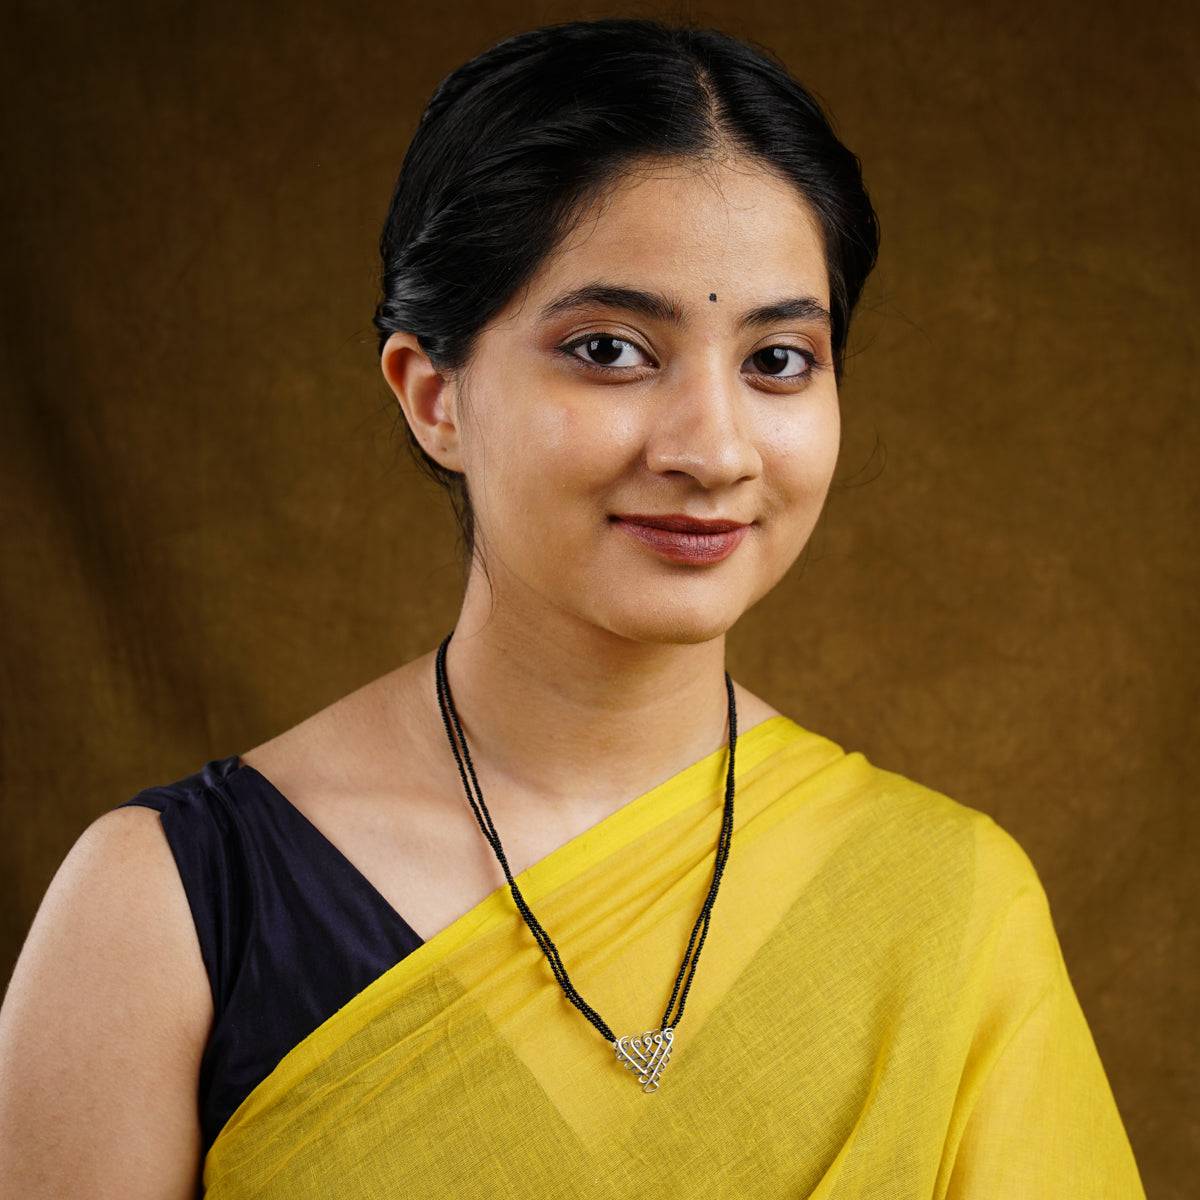 Saraswati Mangalsutra: Small